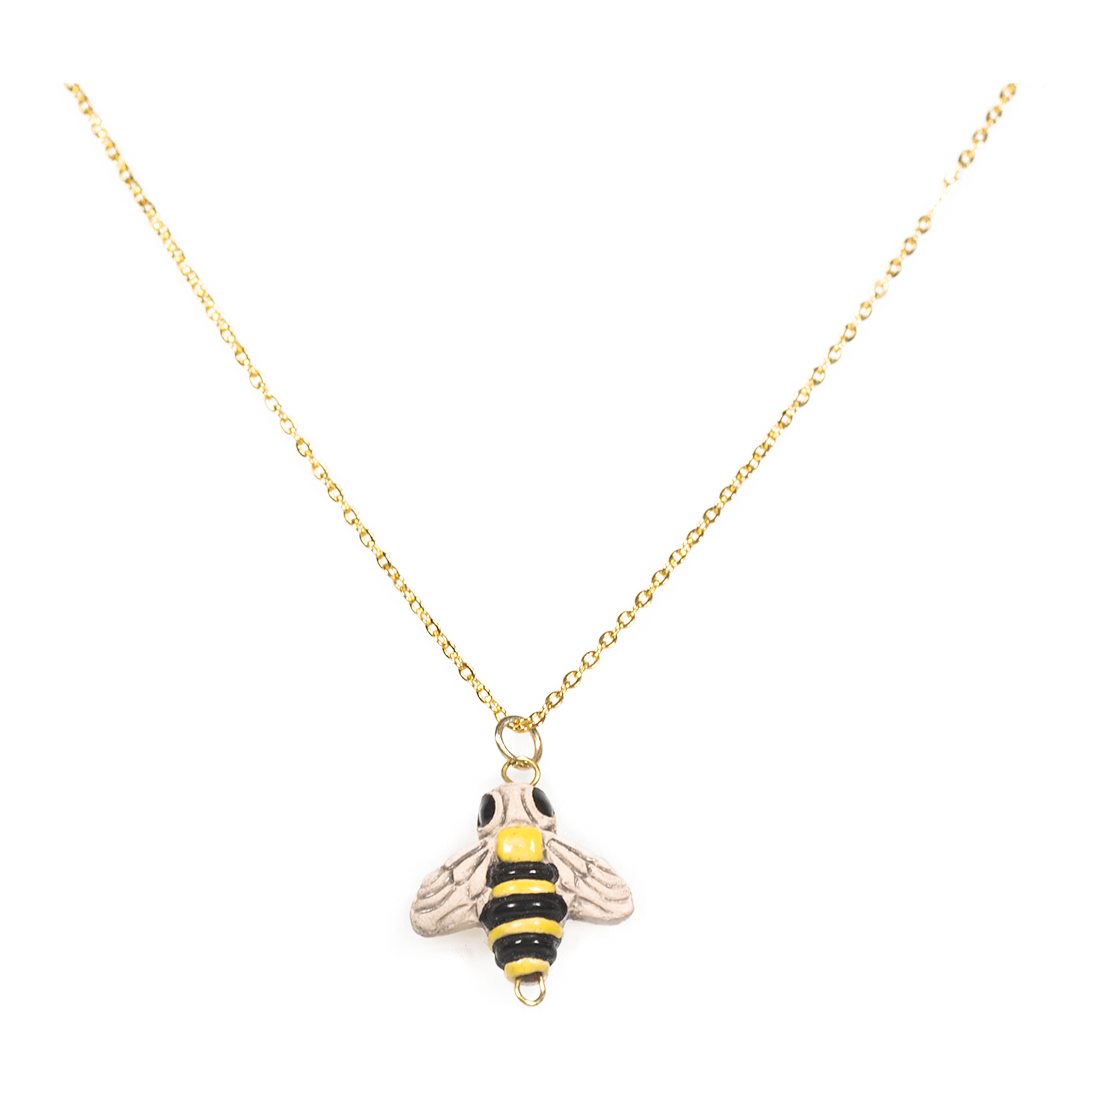 Bee charm handmade necklace